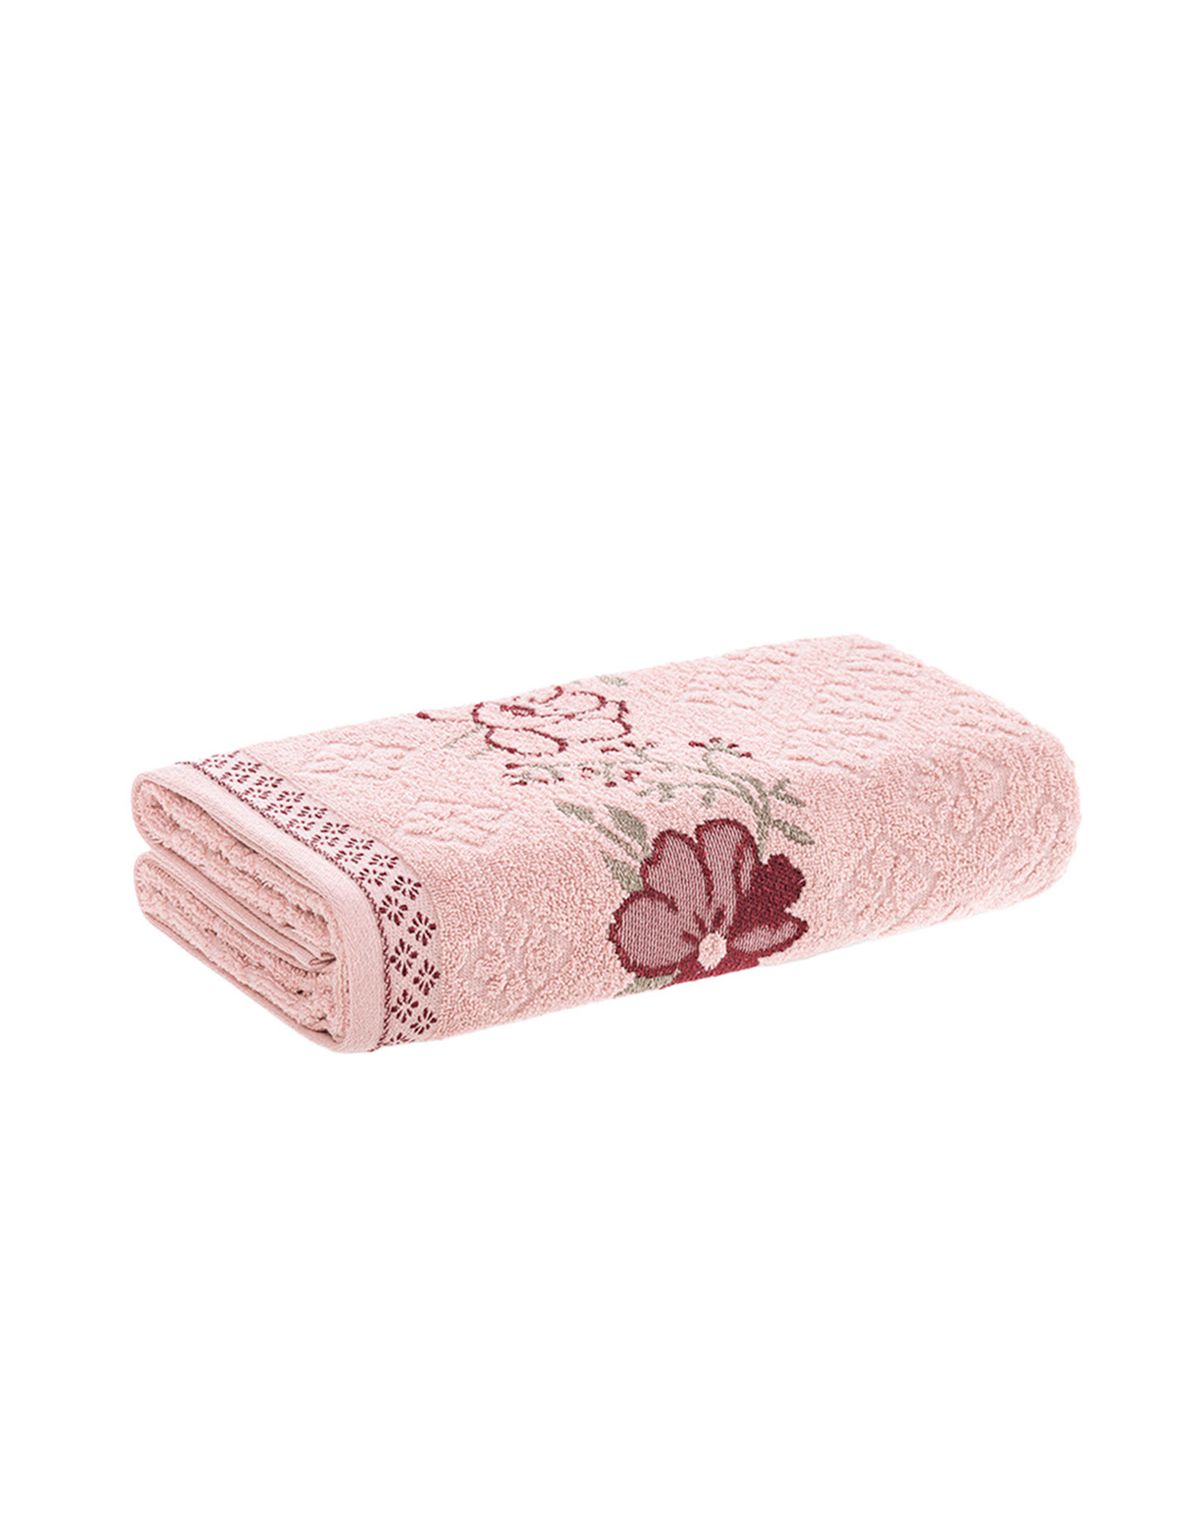 689337001-toalha-de-banho-karsten-bordada-floral-rose-u-72b